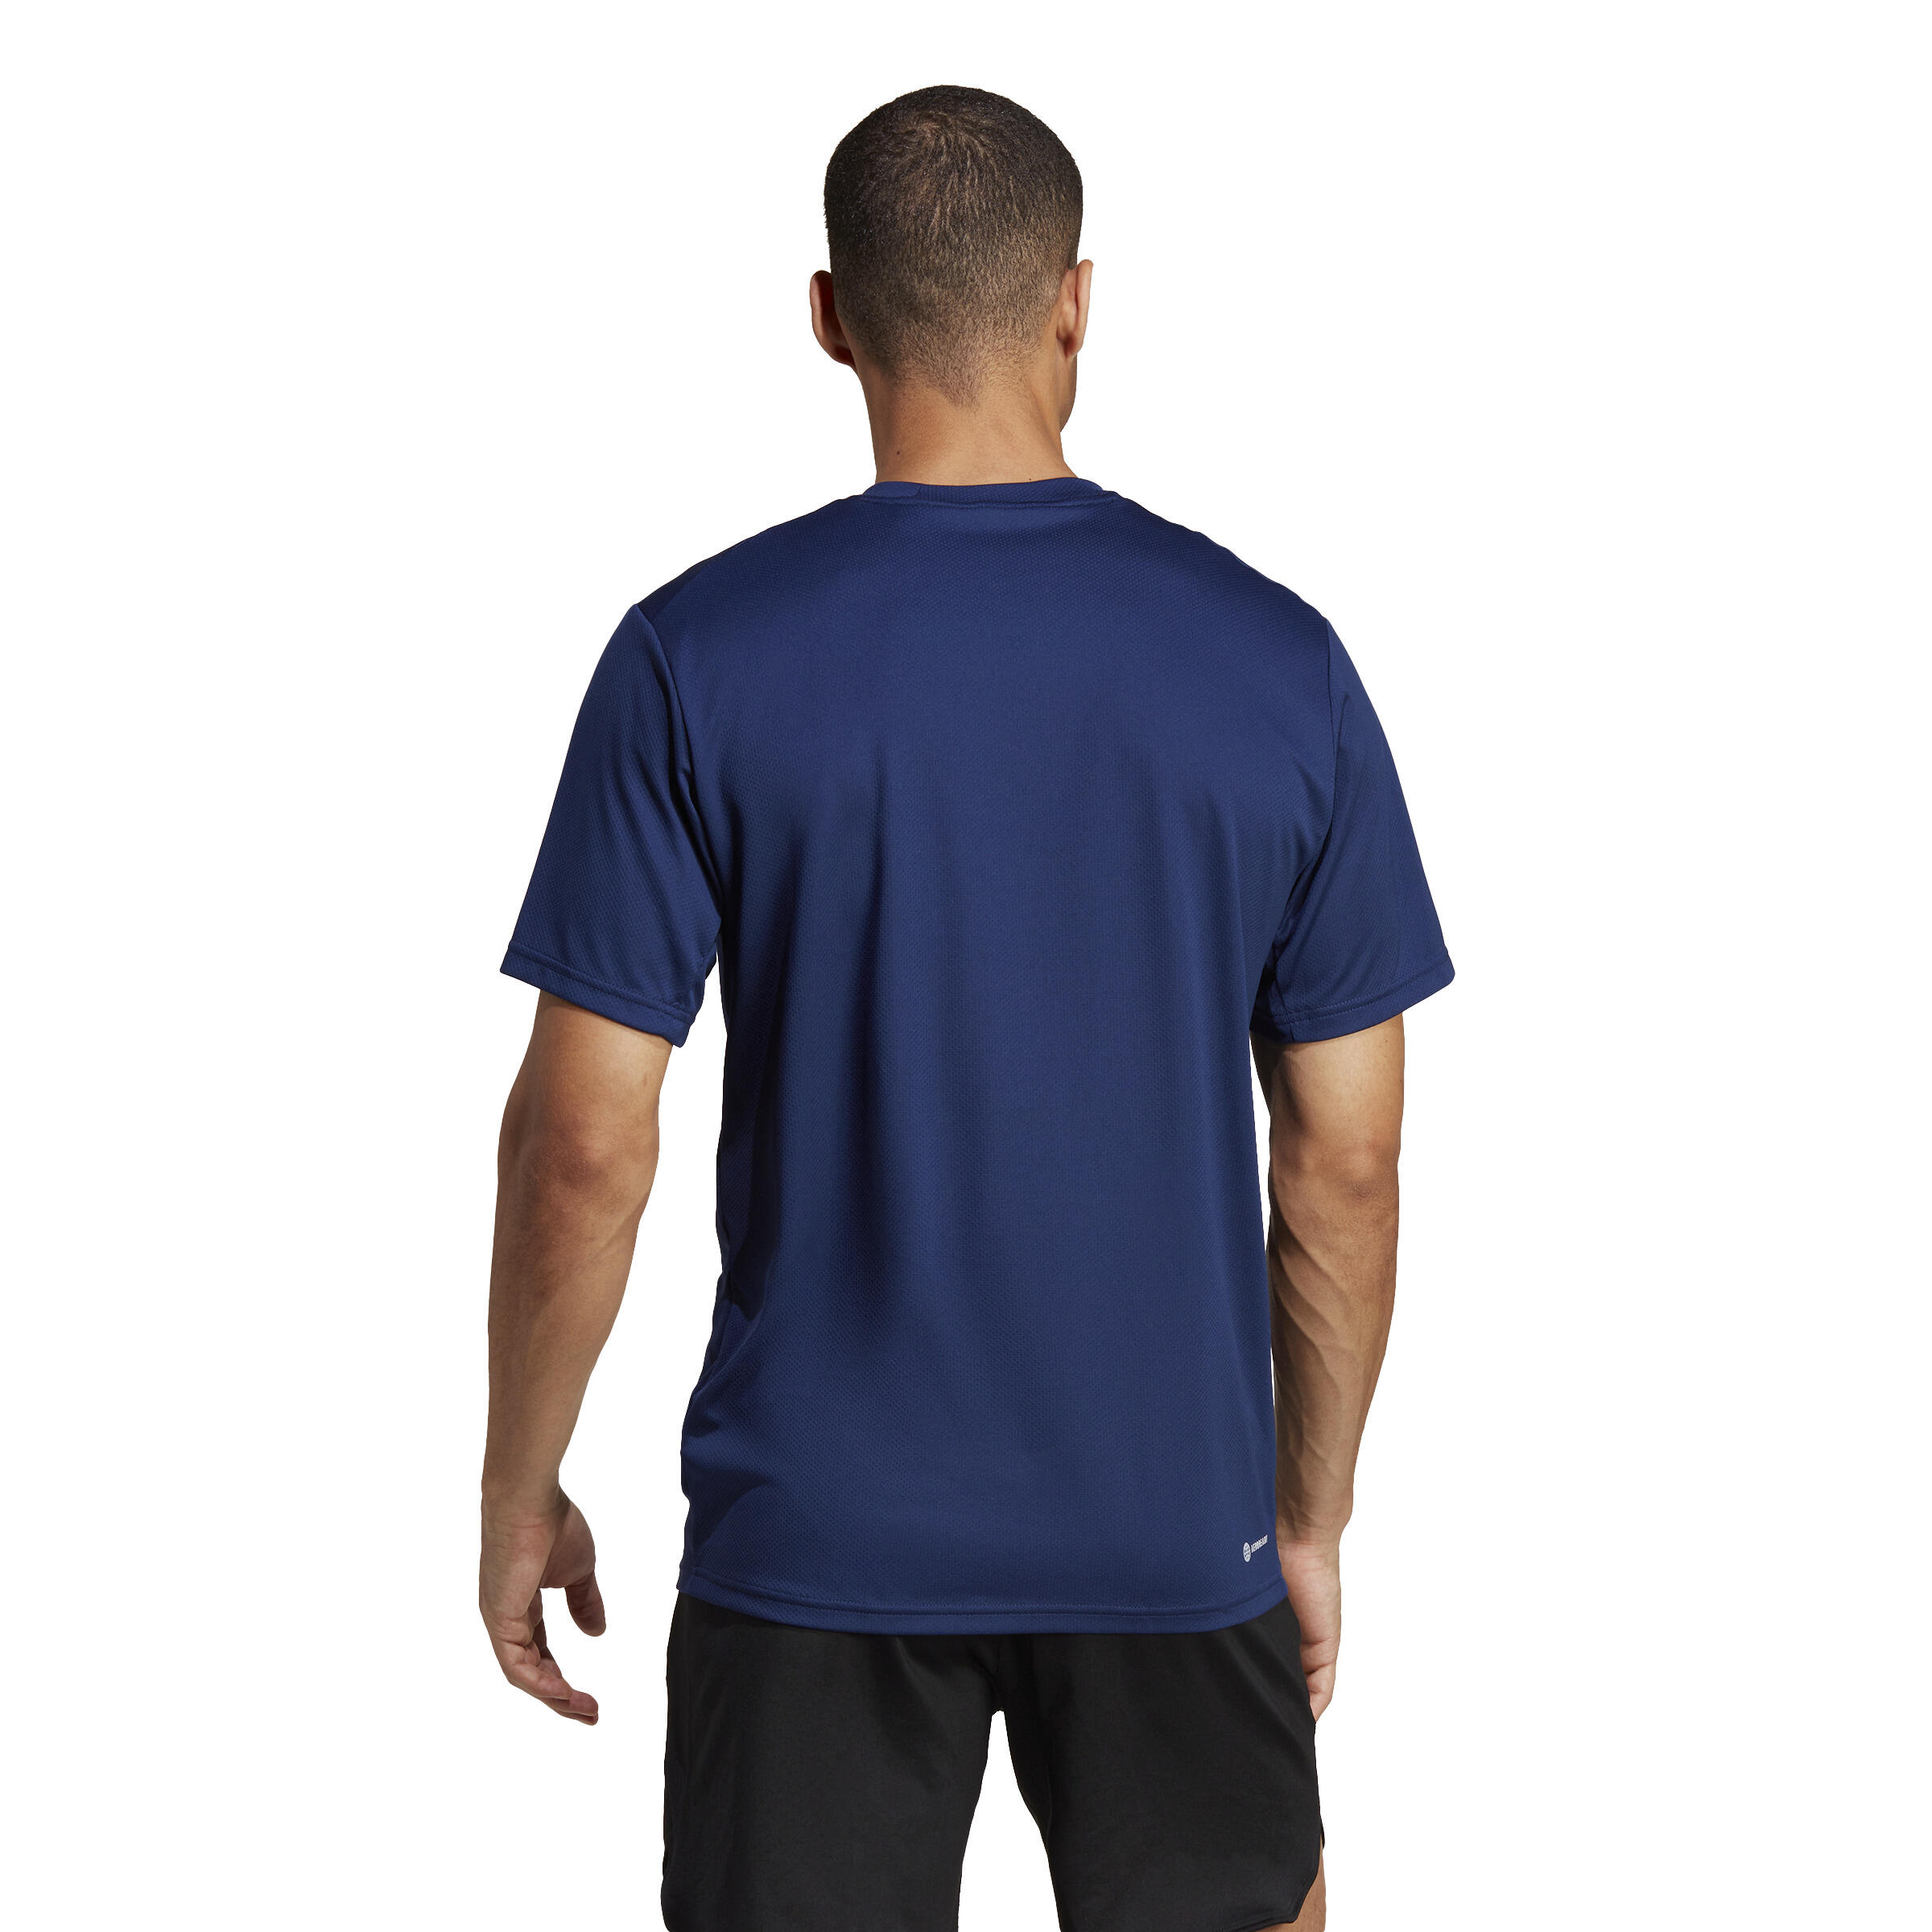 Men's Cardio Fitness T-Shirt - Blue 4/8